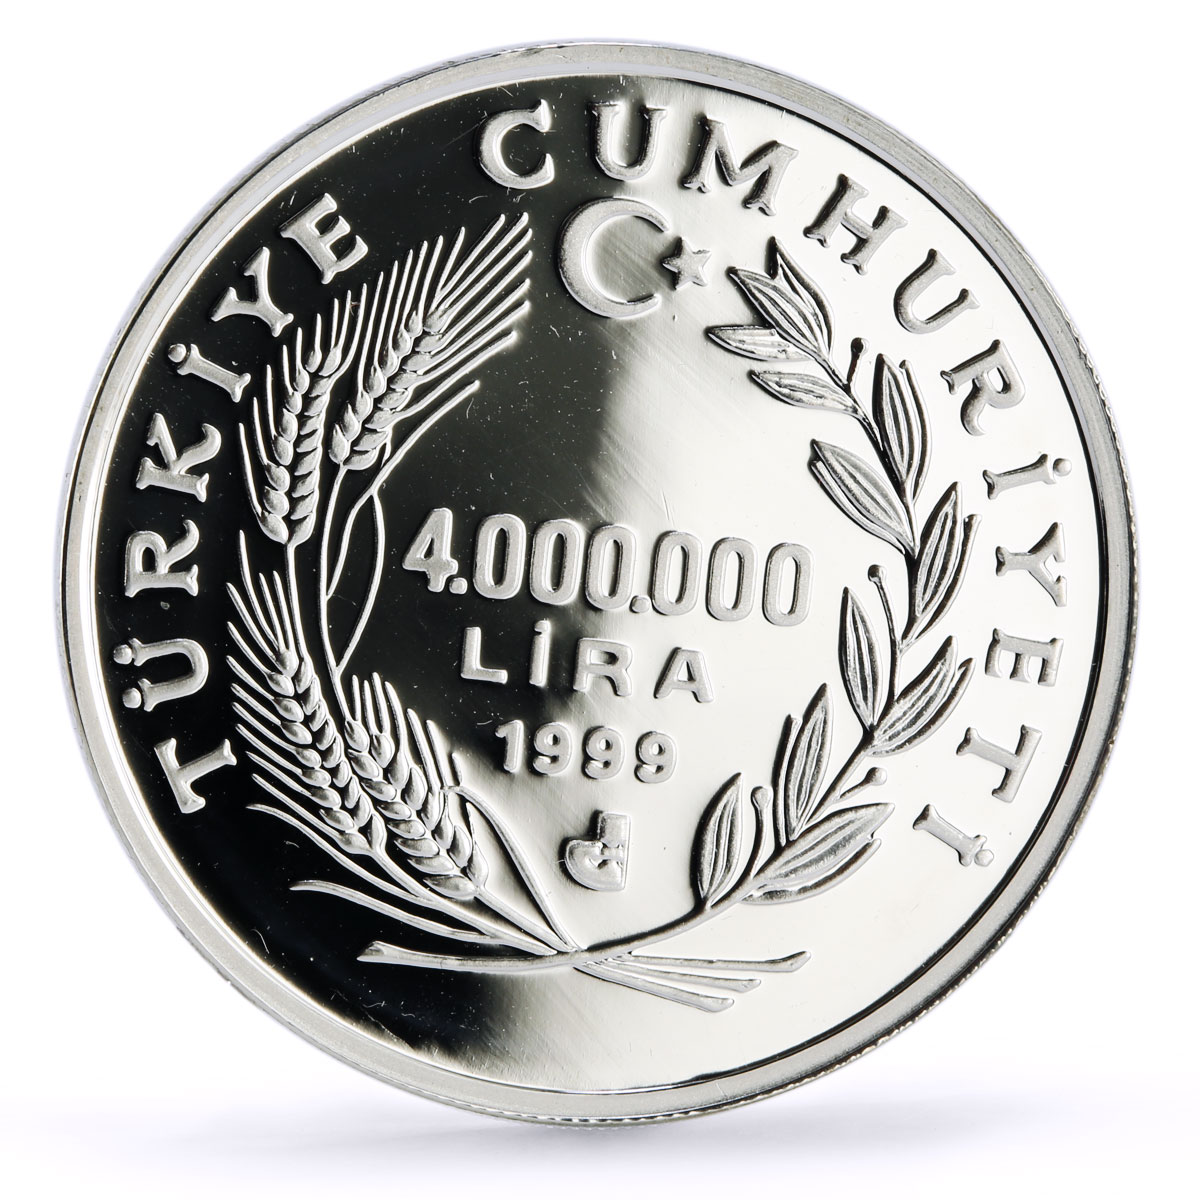 Turkey 4000000 lira Conservation Wildlife Lizard Fauna proof silver coin 1999